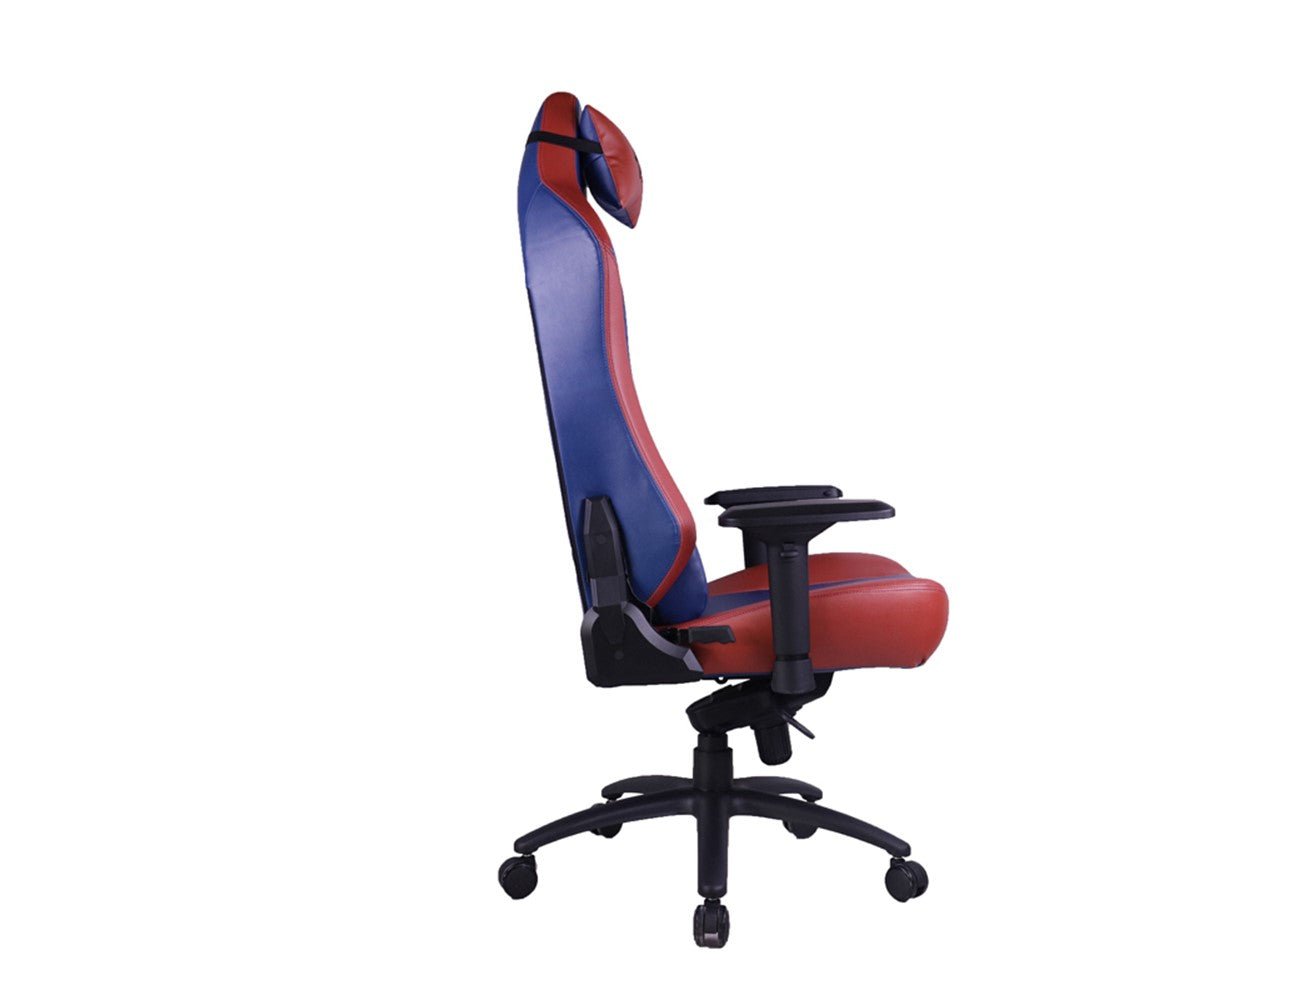 GameOn Licensed Gaming Chair With Adjustable 4D Armrest & Metal Base - Superman